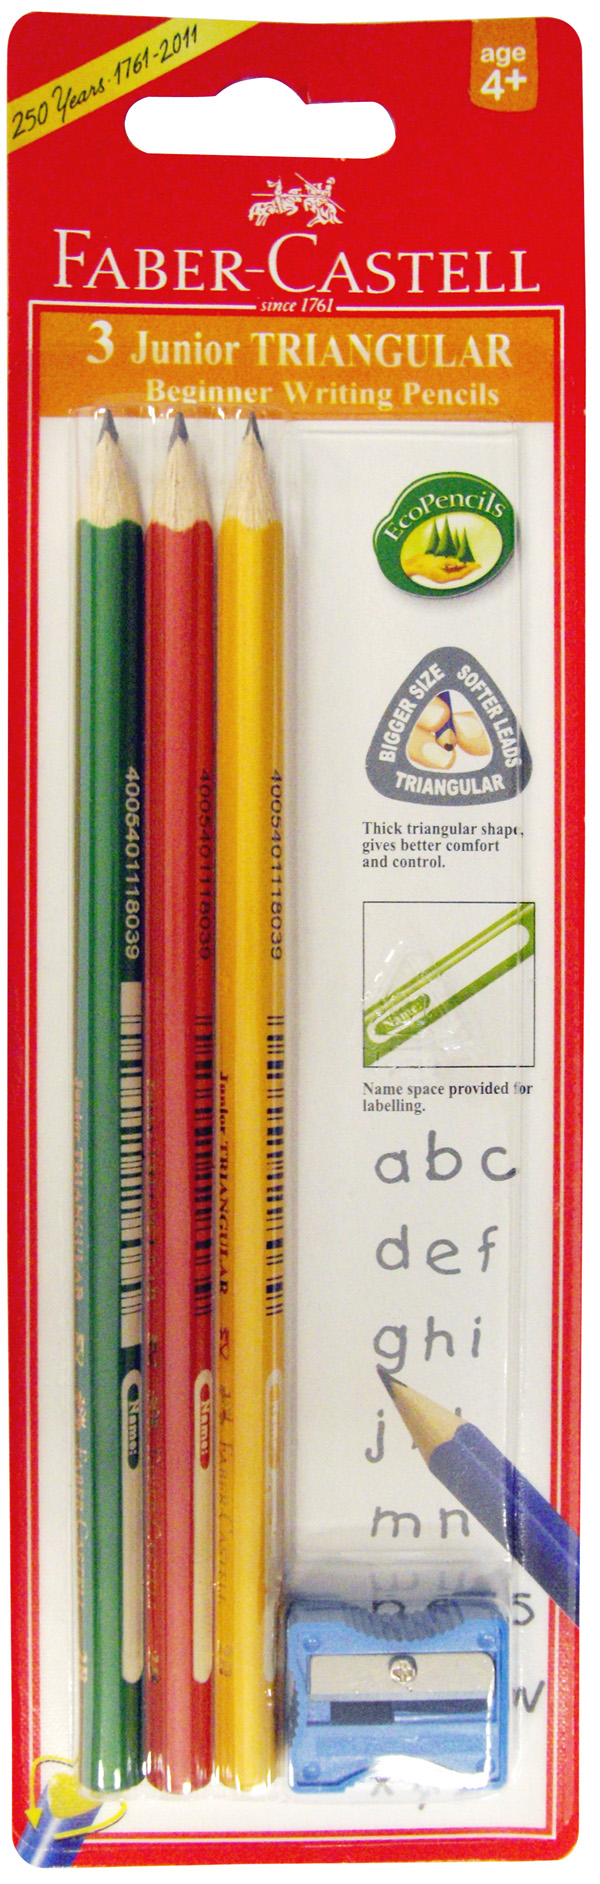 FABER-CASTELL 輝柏 116503 大三角鉛筆3支入+削筆器 / 組